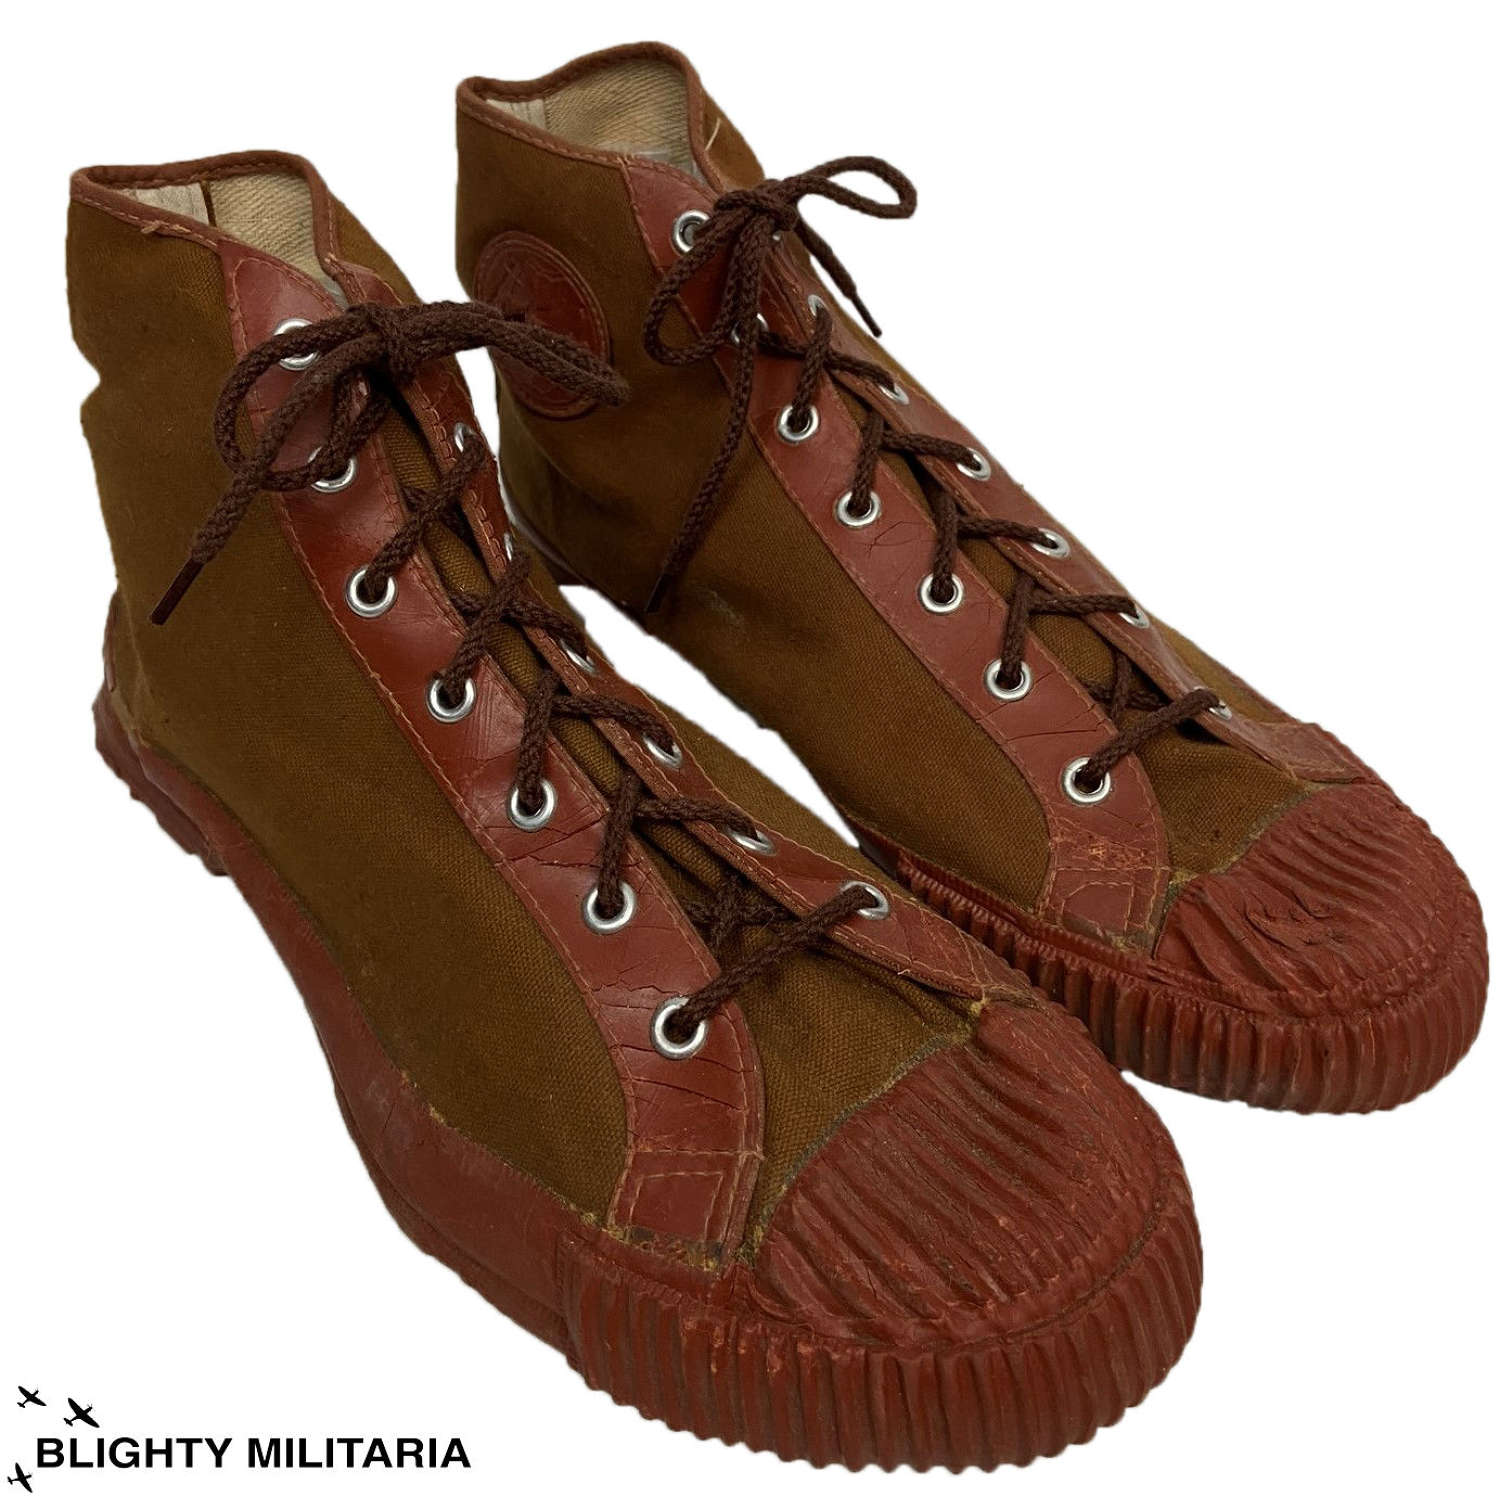 Original 1950s British Jungle Boots - Malayan Emergency